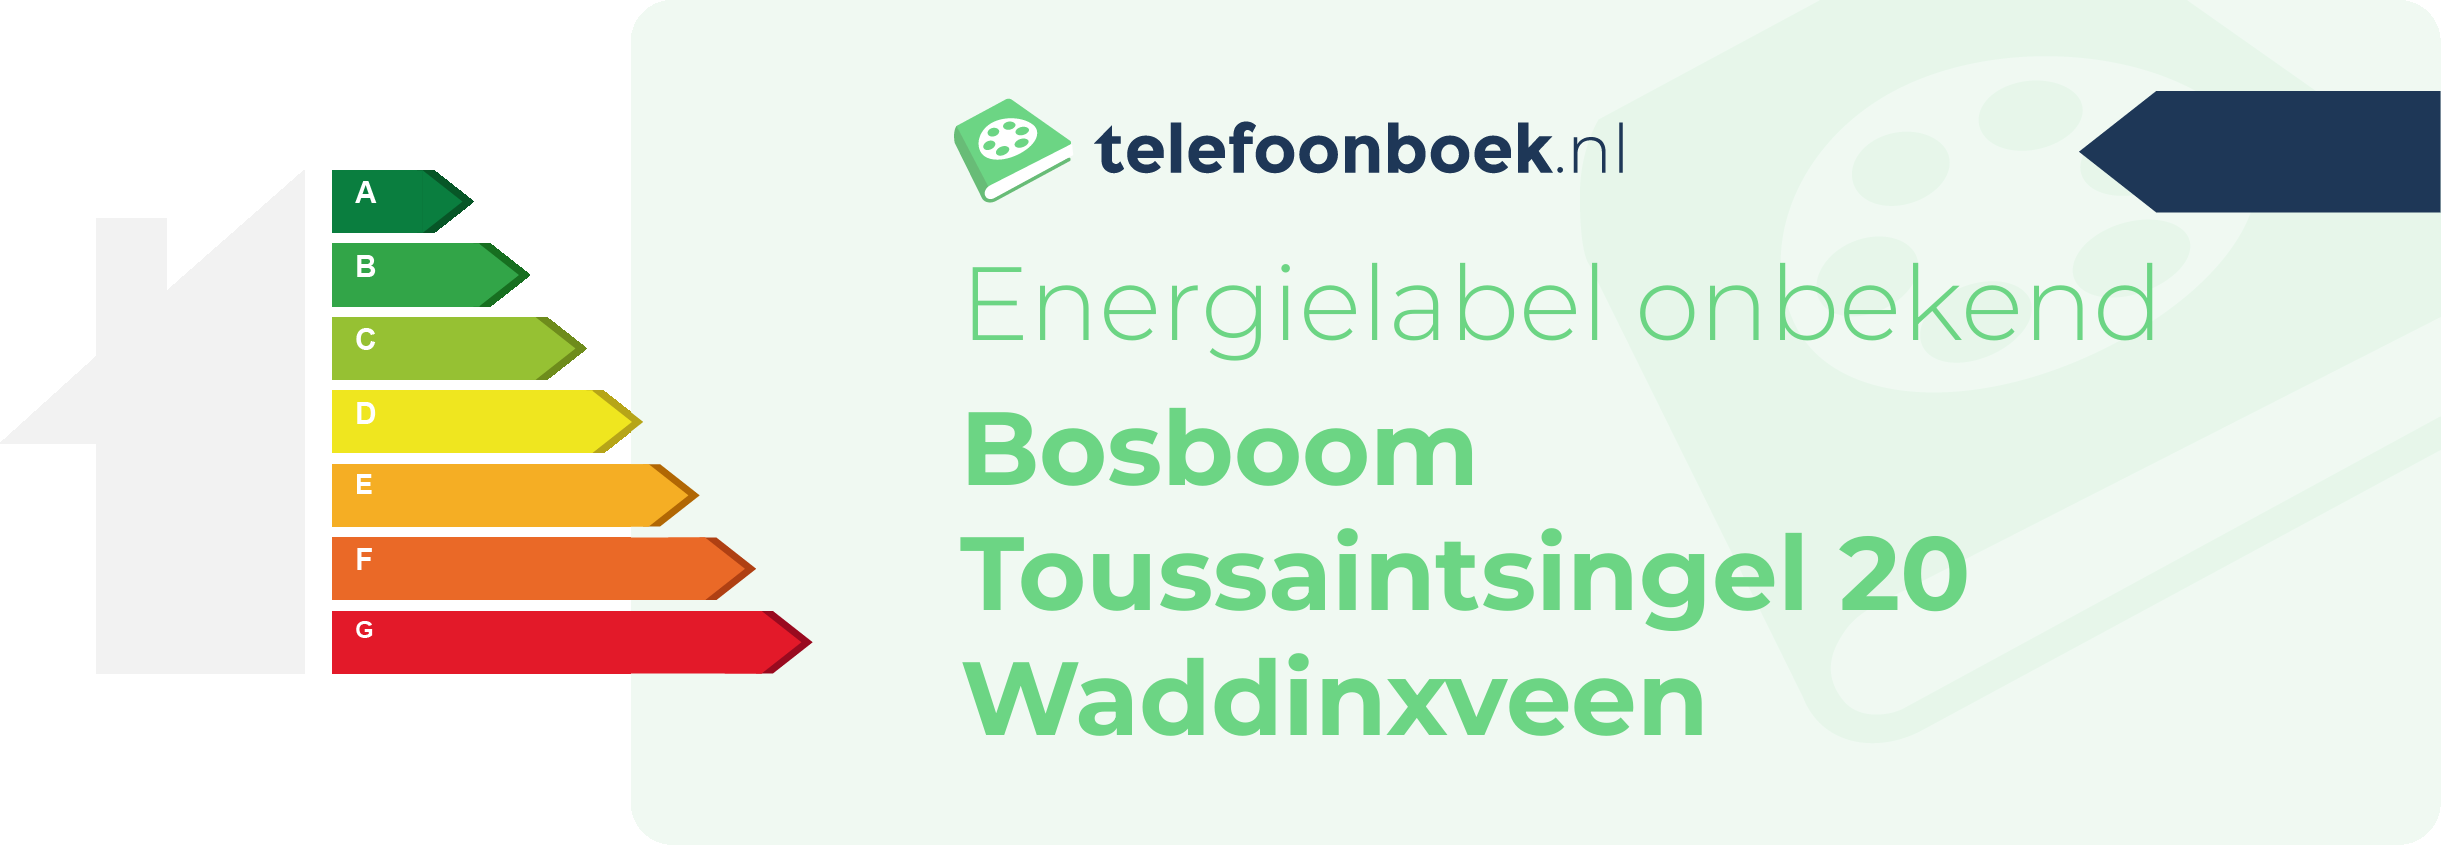 Energielabel Bosboom Toussaintsingel 20 Waddinxveen